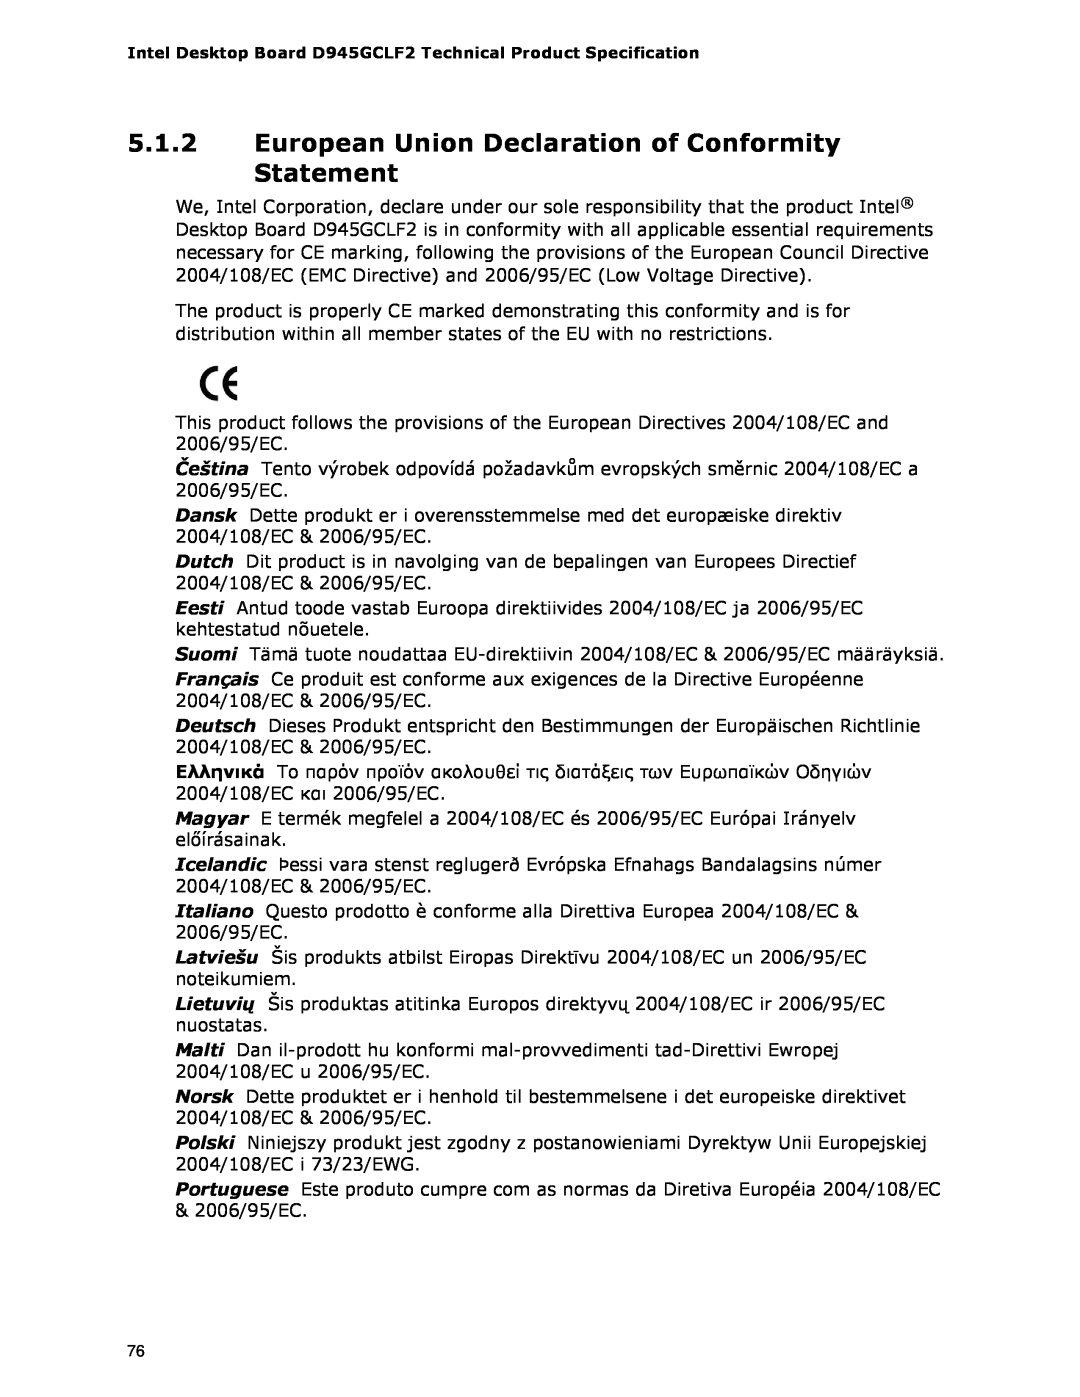 Intel D945GCLF2 specifications European Union Declaration of Conformity Statement 